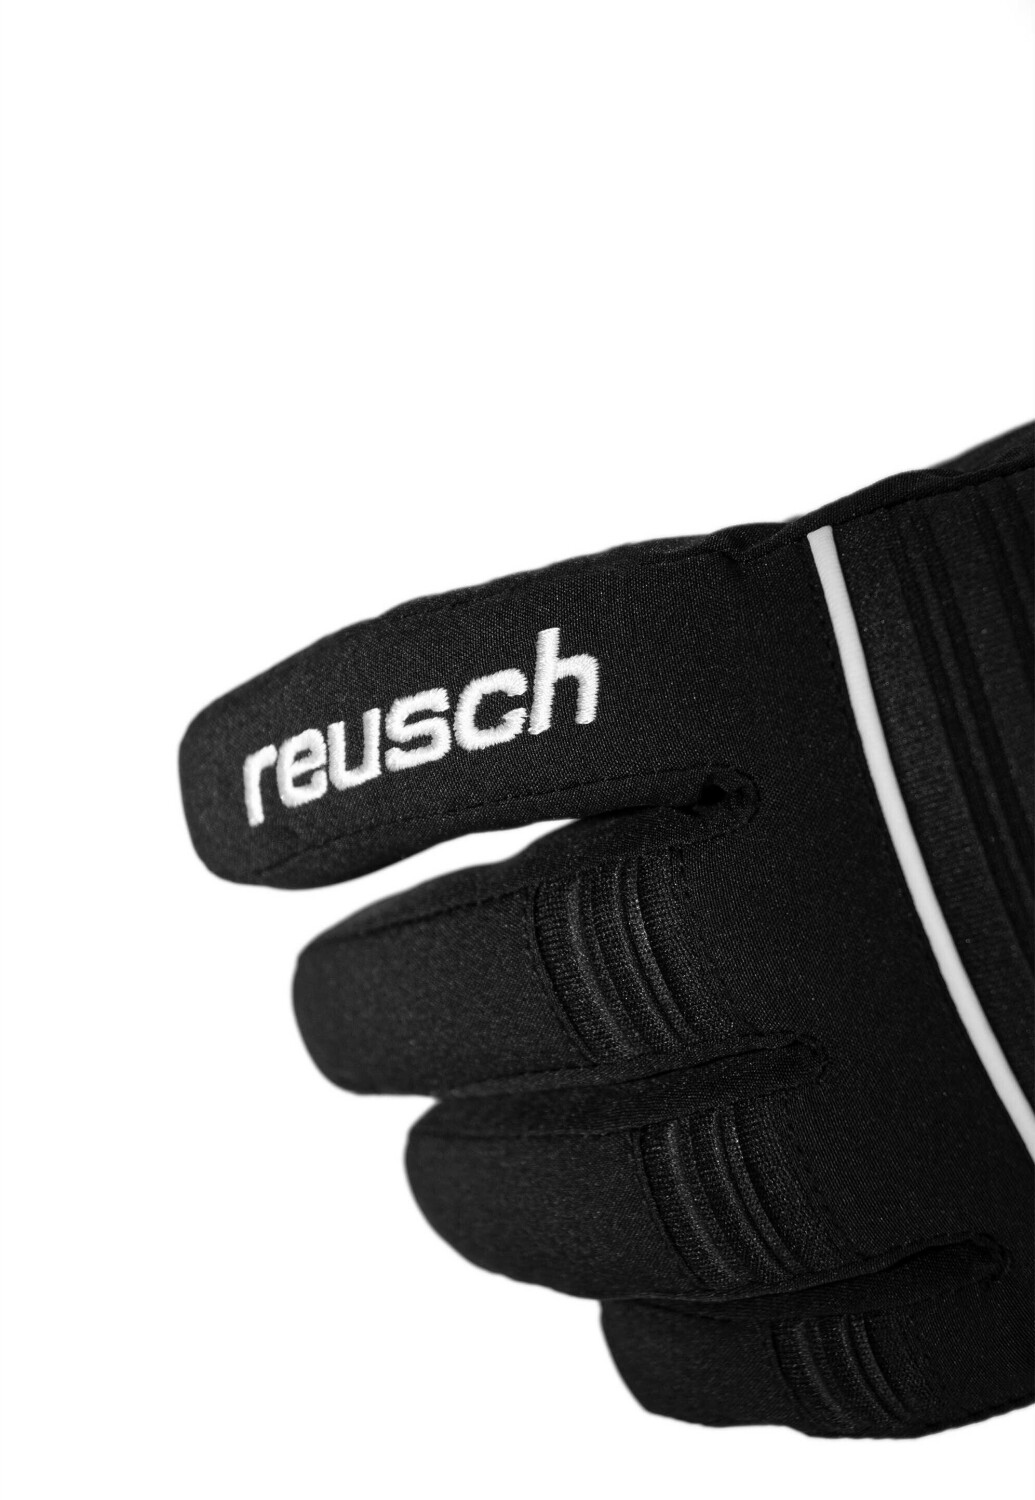 Reusch Kondor R-tex XT Junior (6361218) black/white ab 27,90 € |  Preisvergleich bei